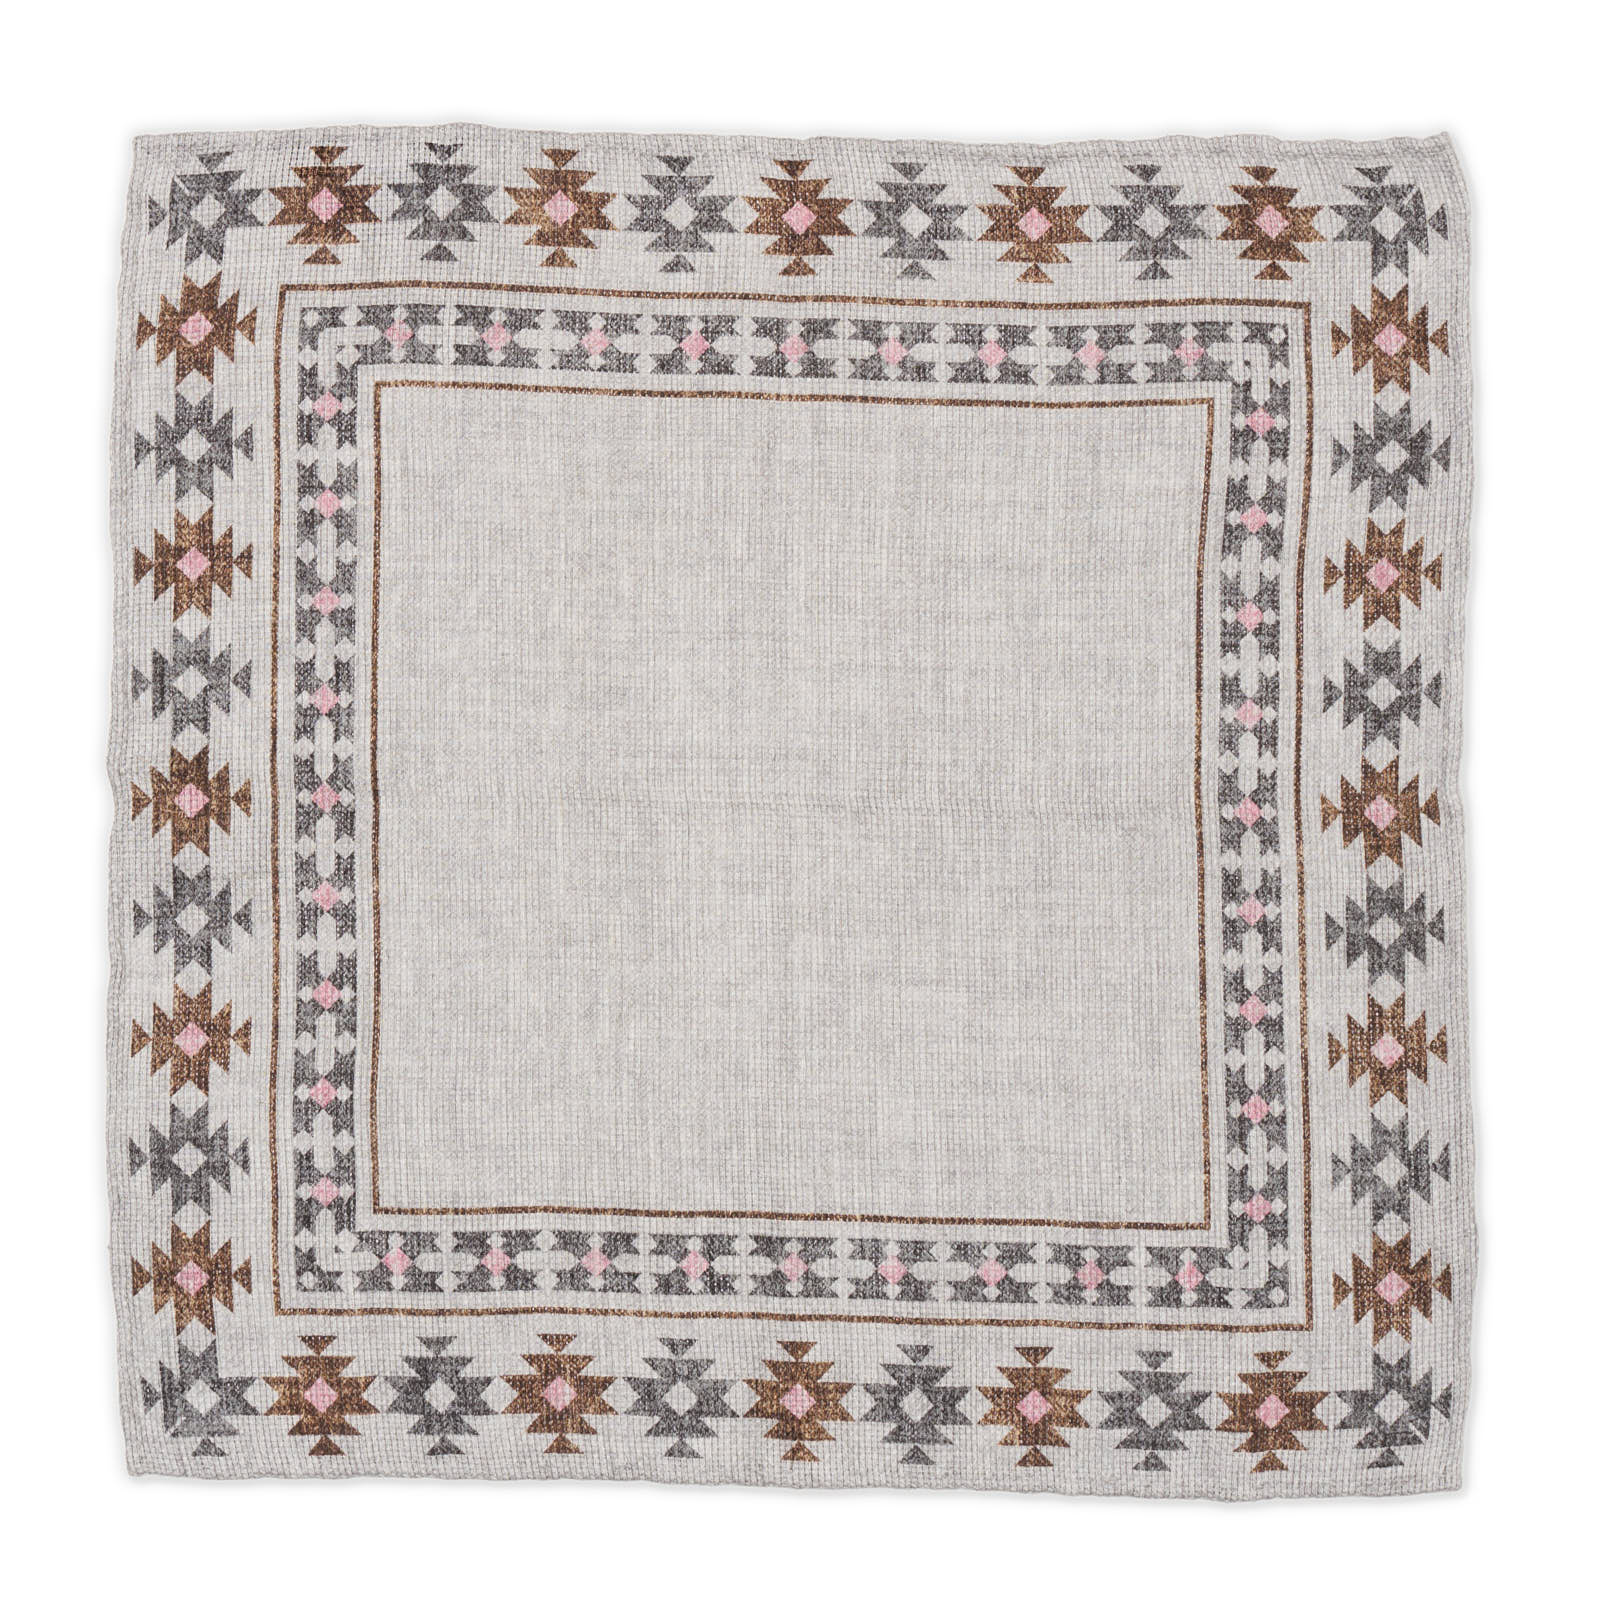 ROSI Handmade Gray-Brown Geometric-Plaster Linen-Cotton Pocket Square Double Sided